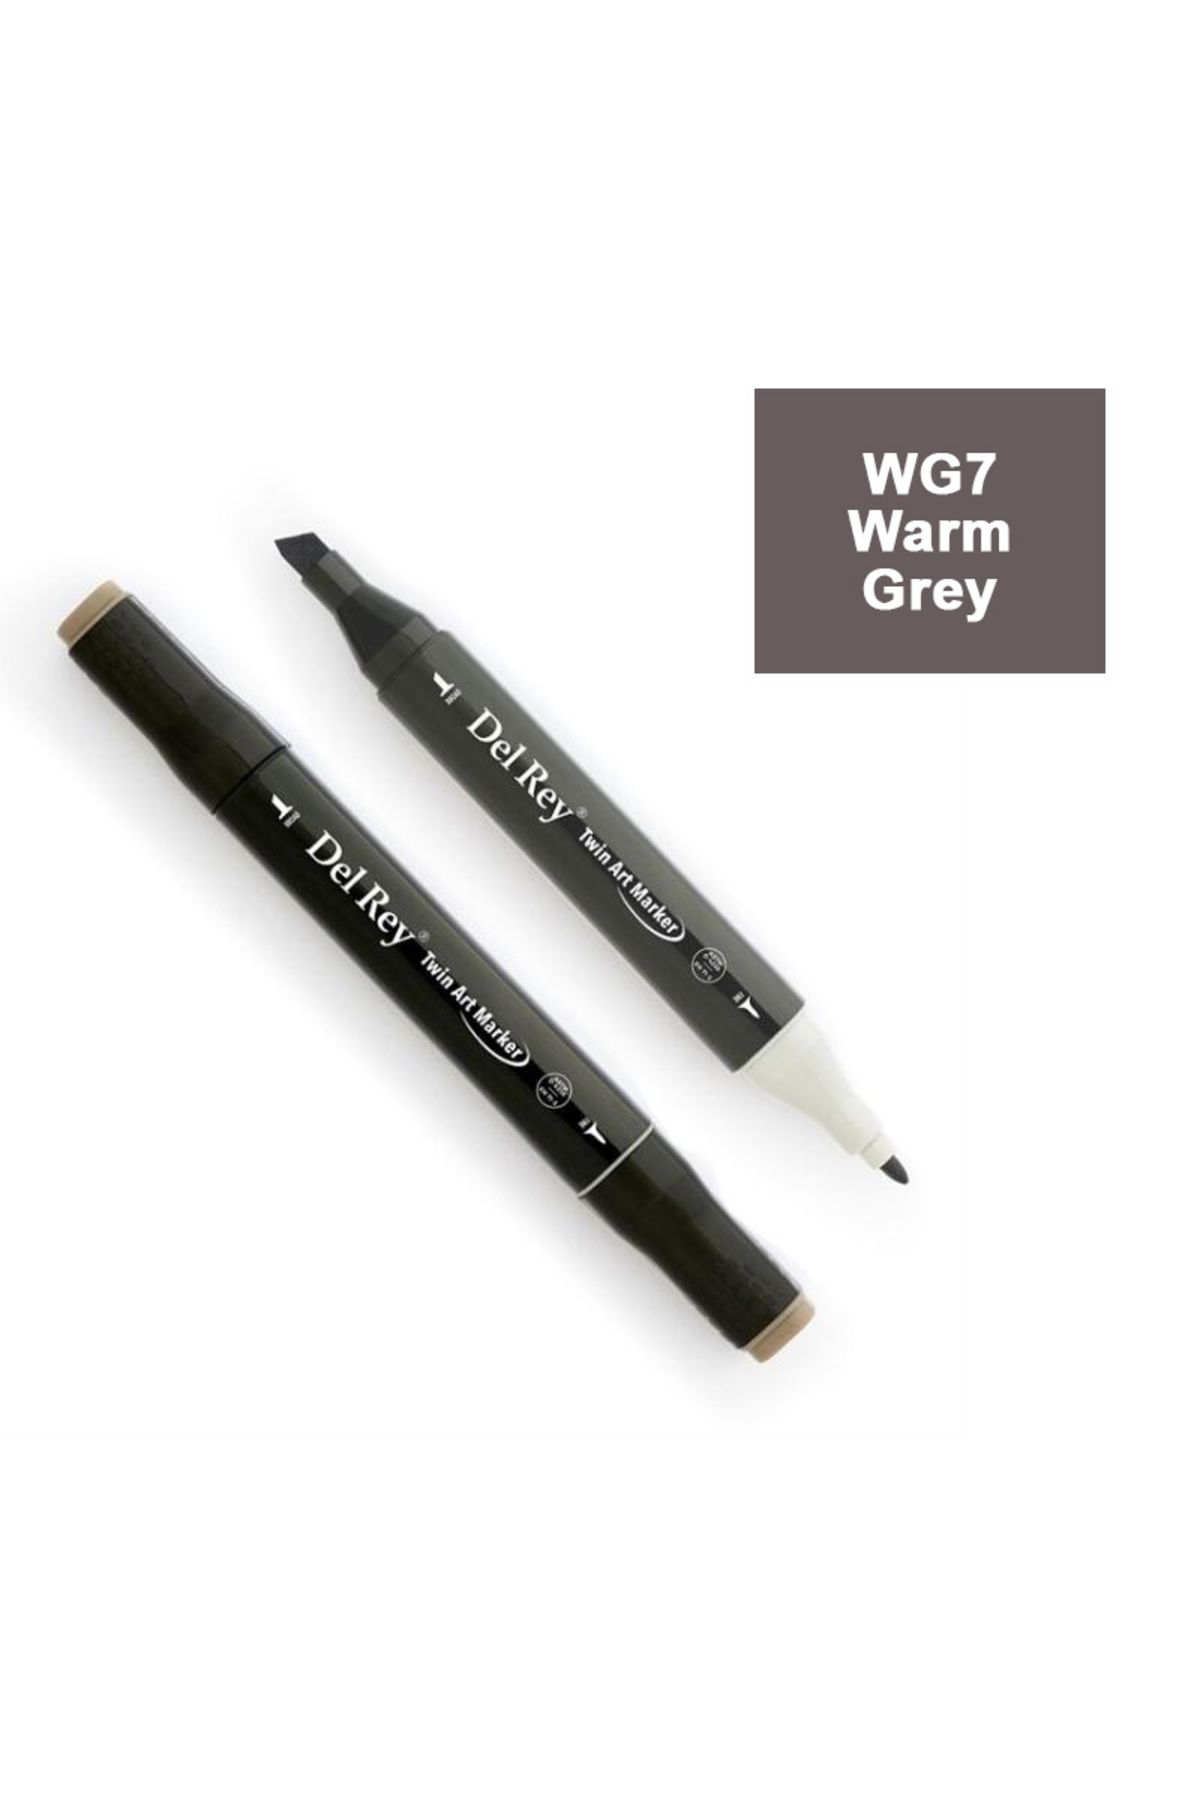 Pebeo Del Rey Twın Marker Wg7 Warm Grey Çift Uçlu Grafik Kalemi Mn-Drwg7